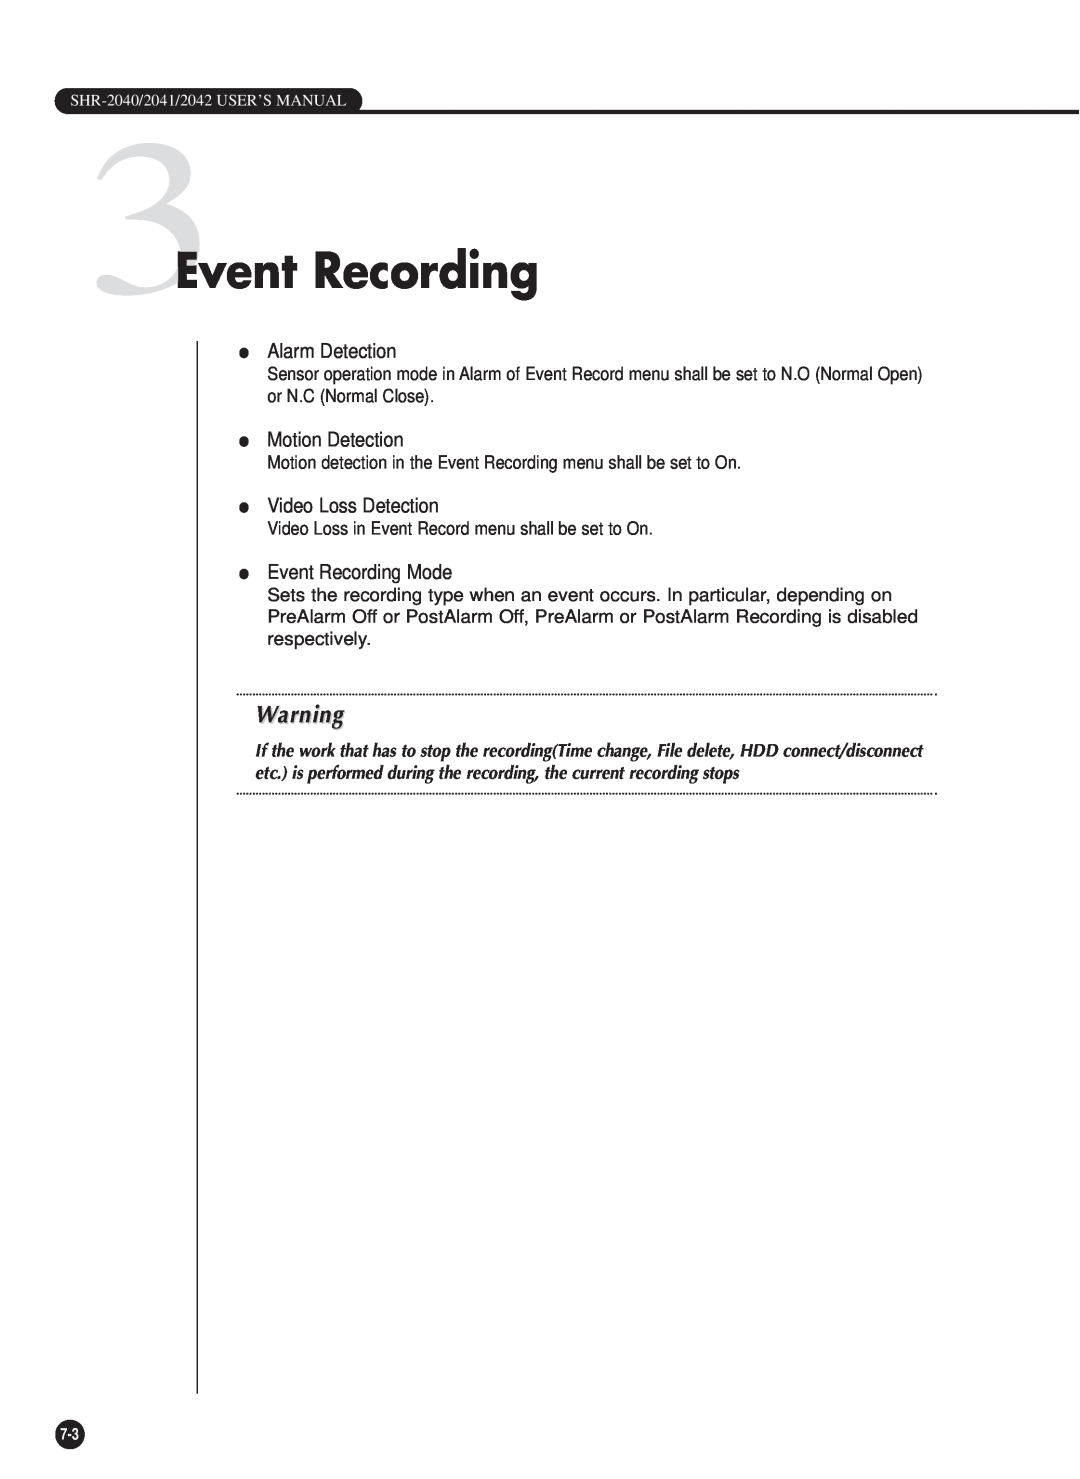 Samsung SHR-2042P manual 3Event Recording, Alarm Detection, Motion Detection, Video Loss Detection, Event Recording Mode 